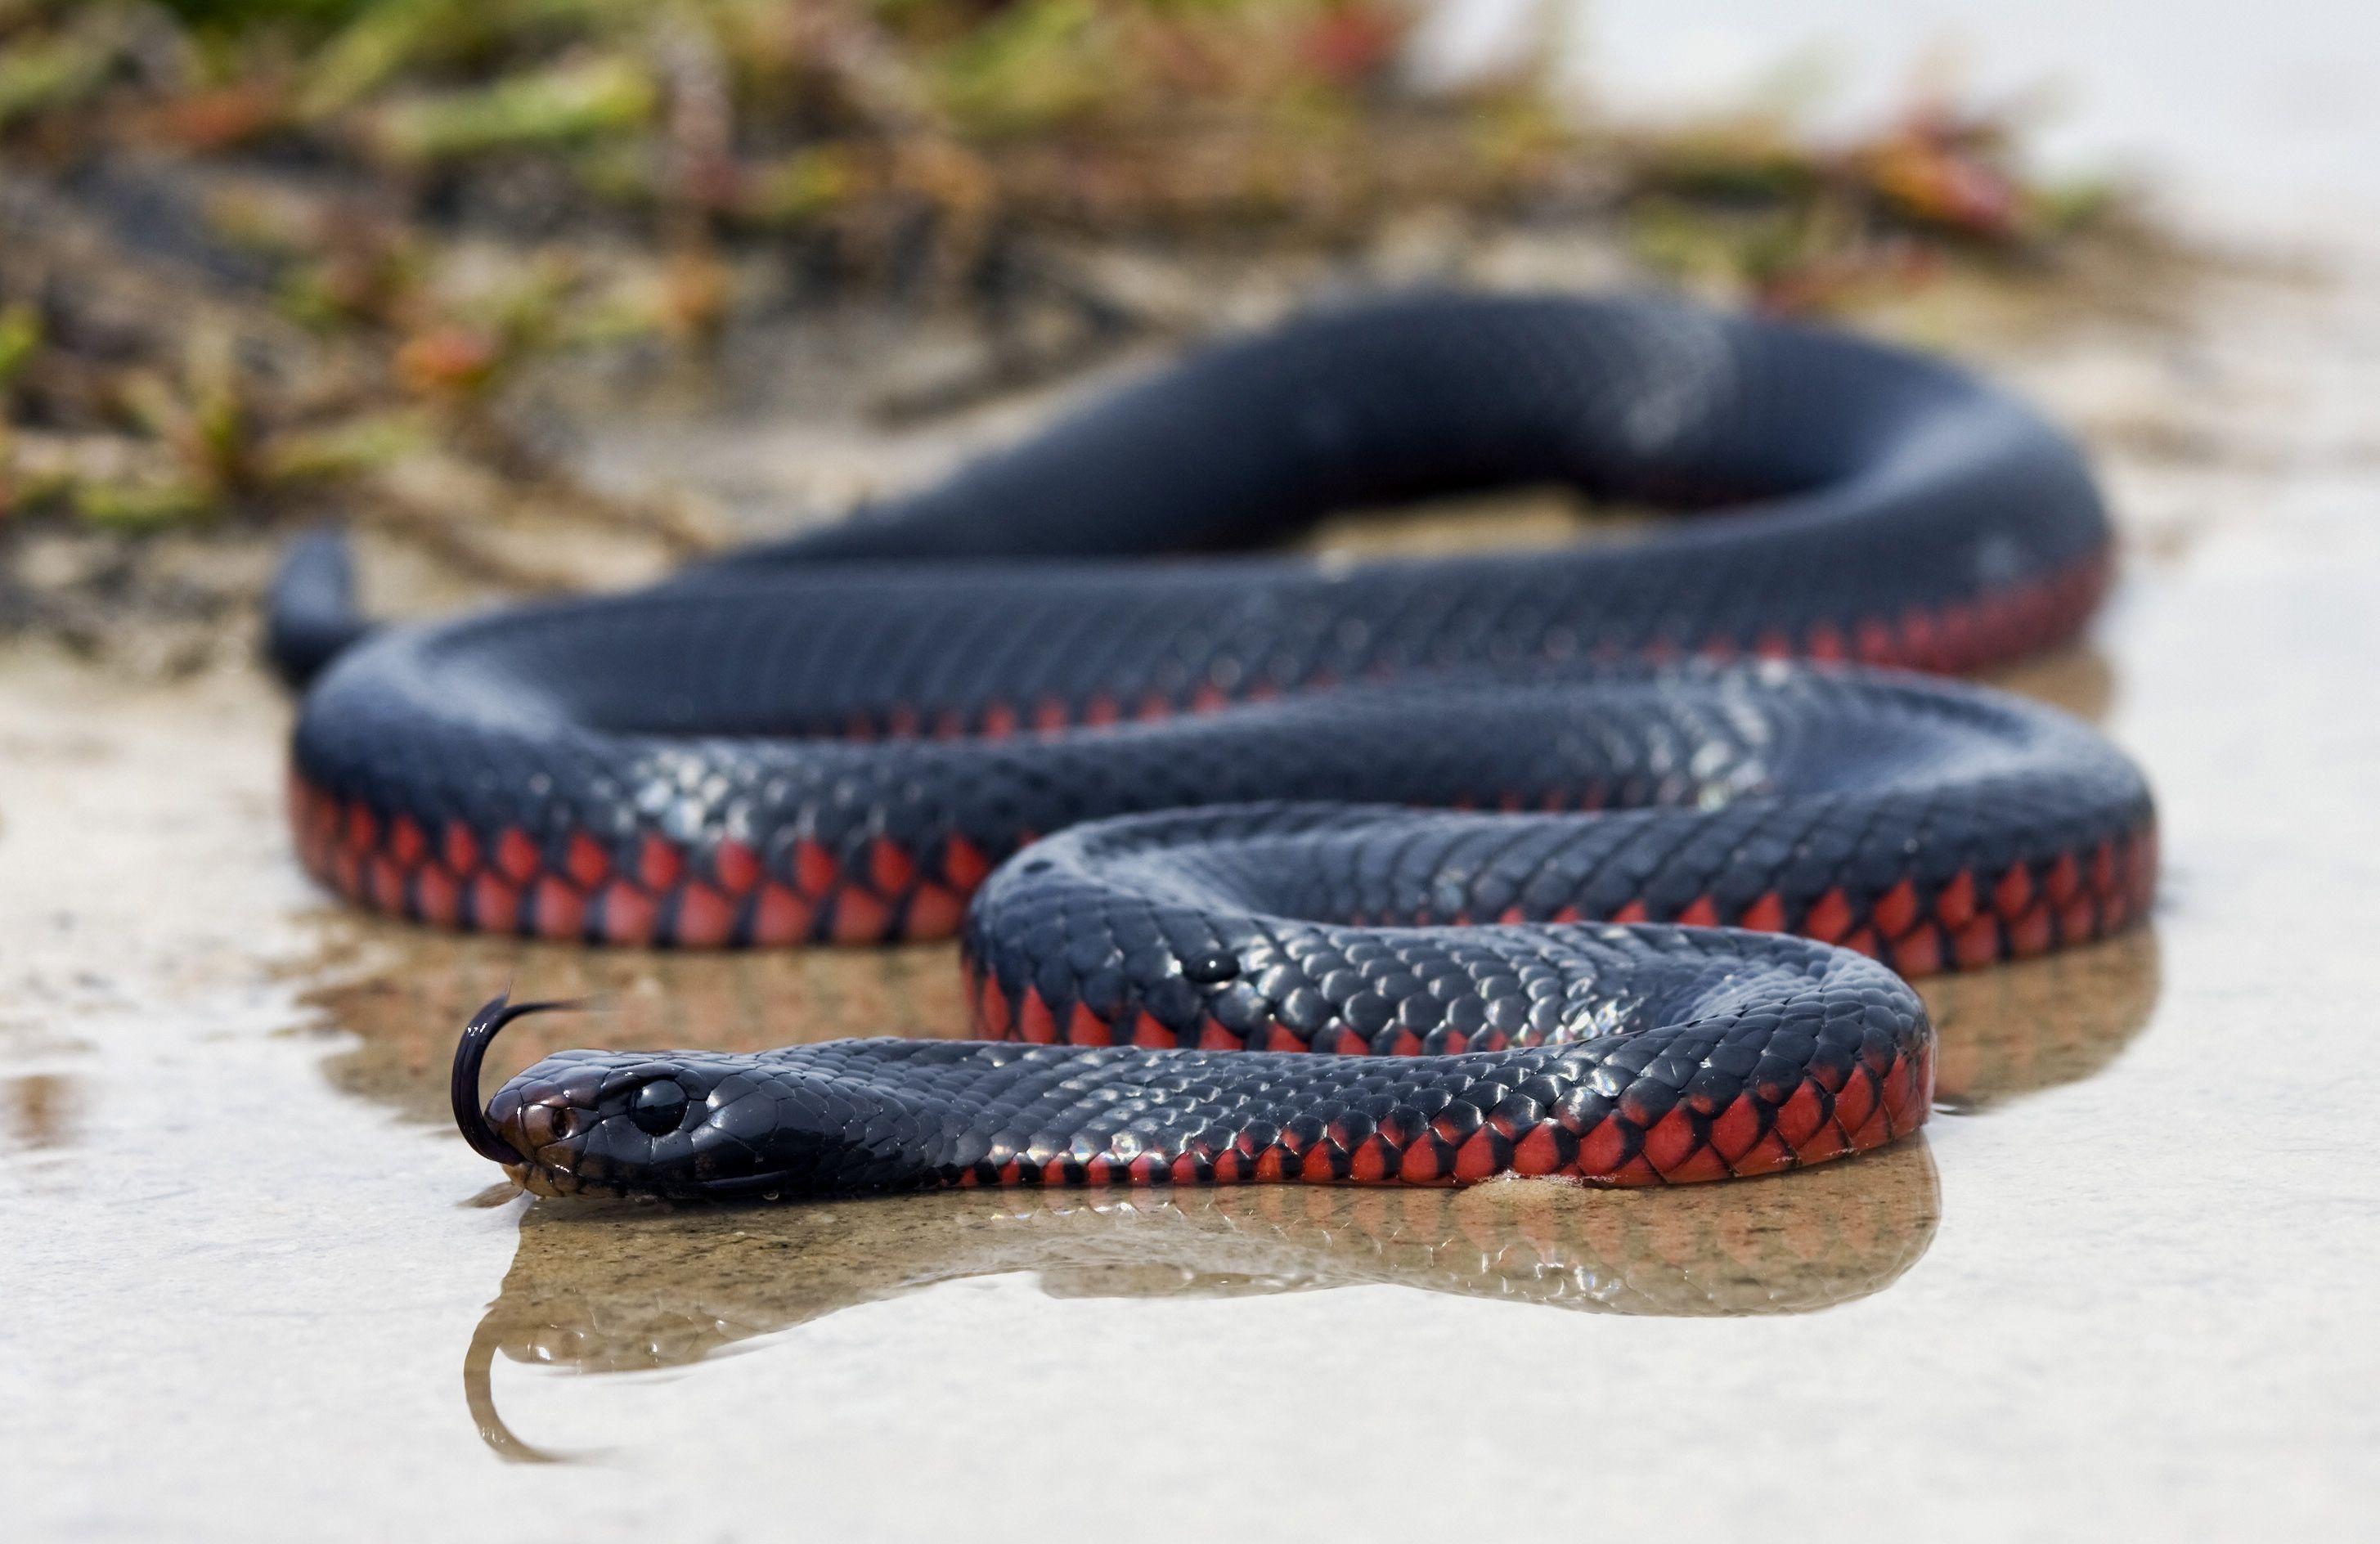 Red Bellied Black Snake HD Wallpaper. Background